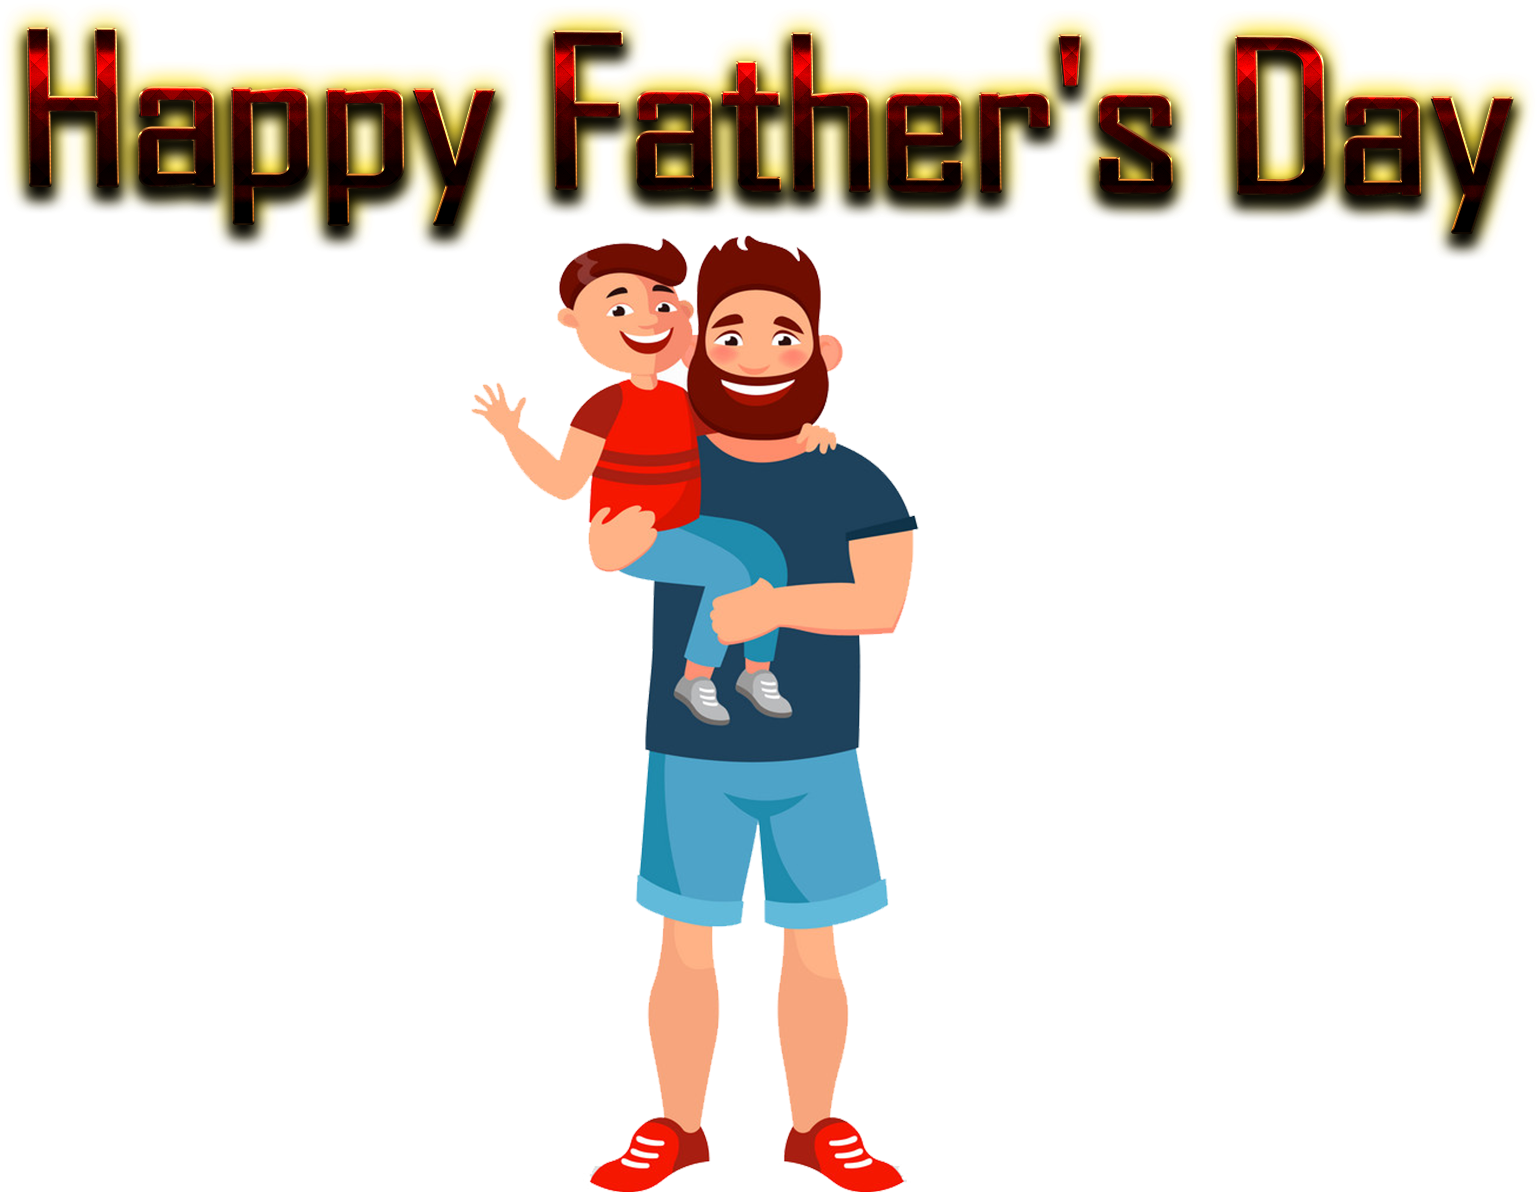 Happy Fathers Day Celebration